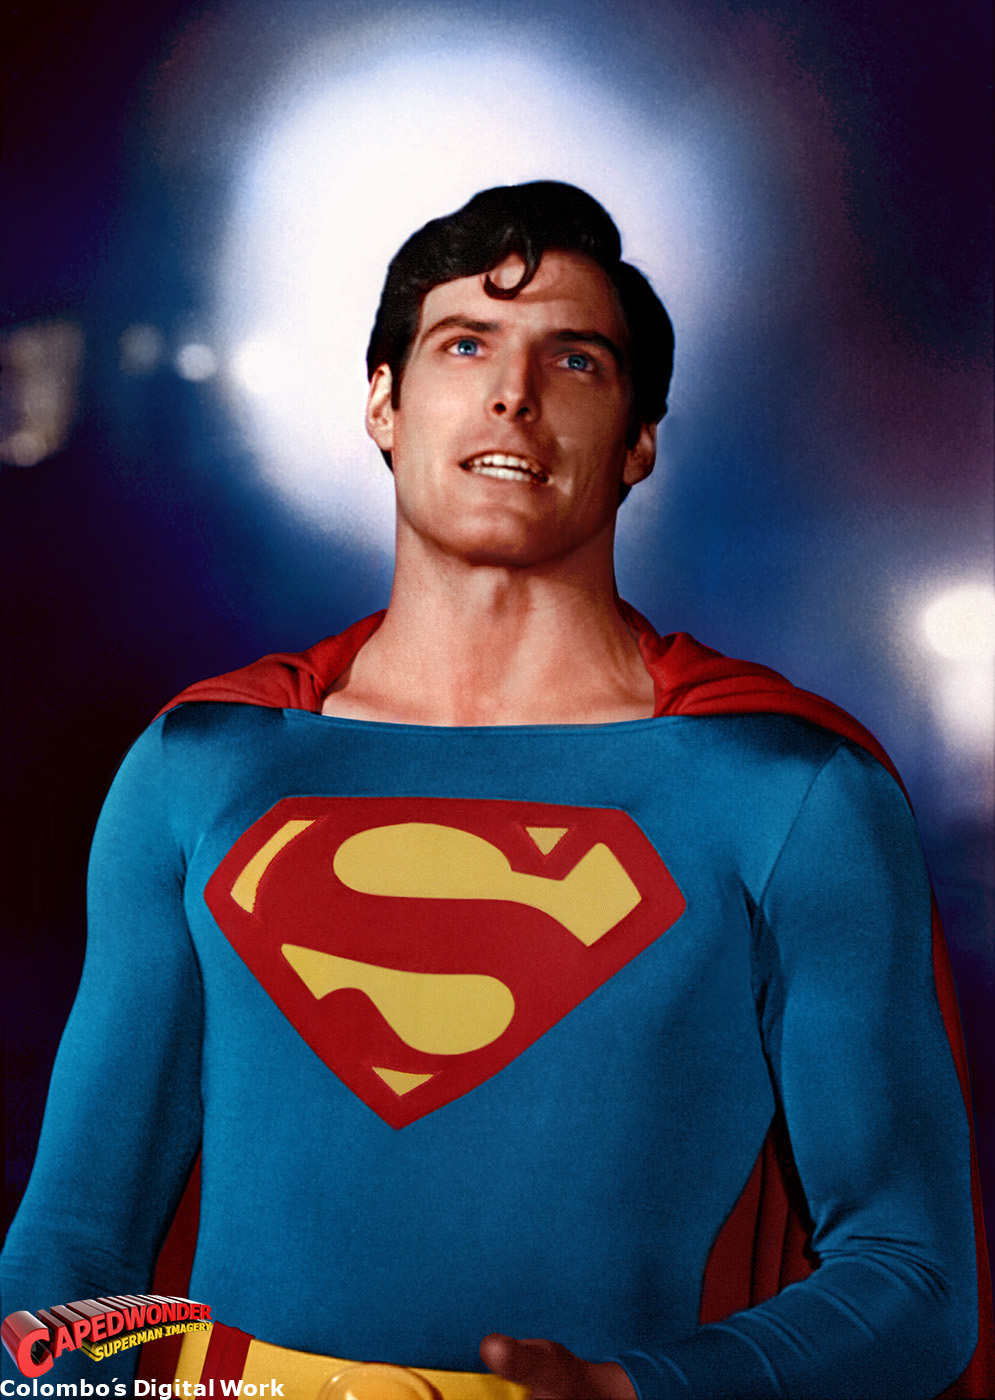 Superman - Superman (The Movie) Photo (20408661) - Fanpop